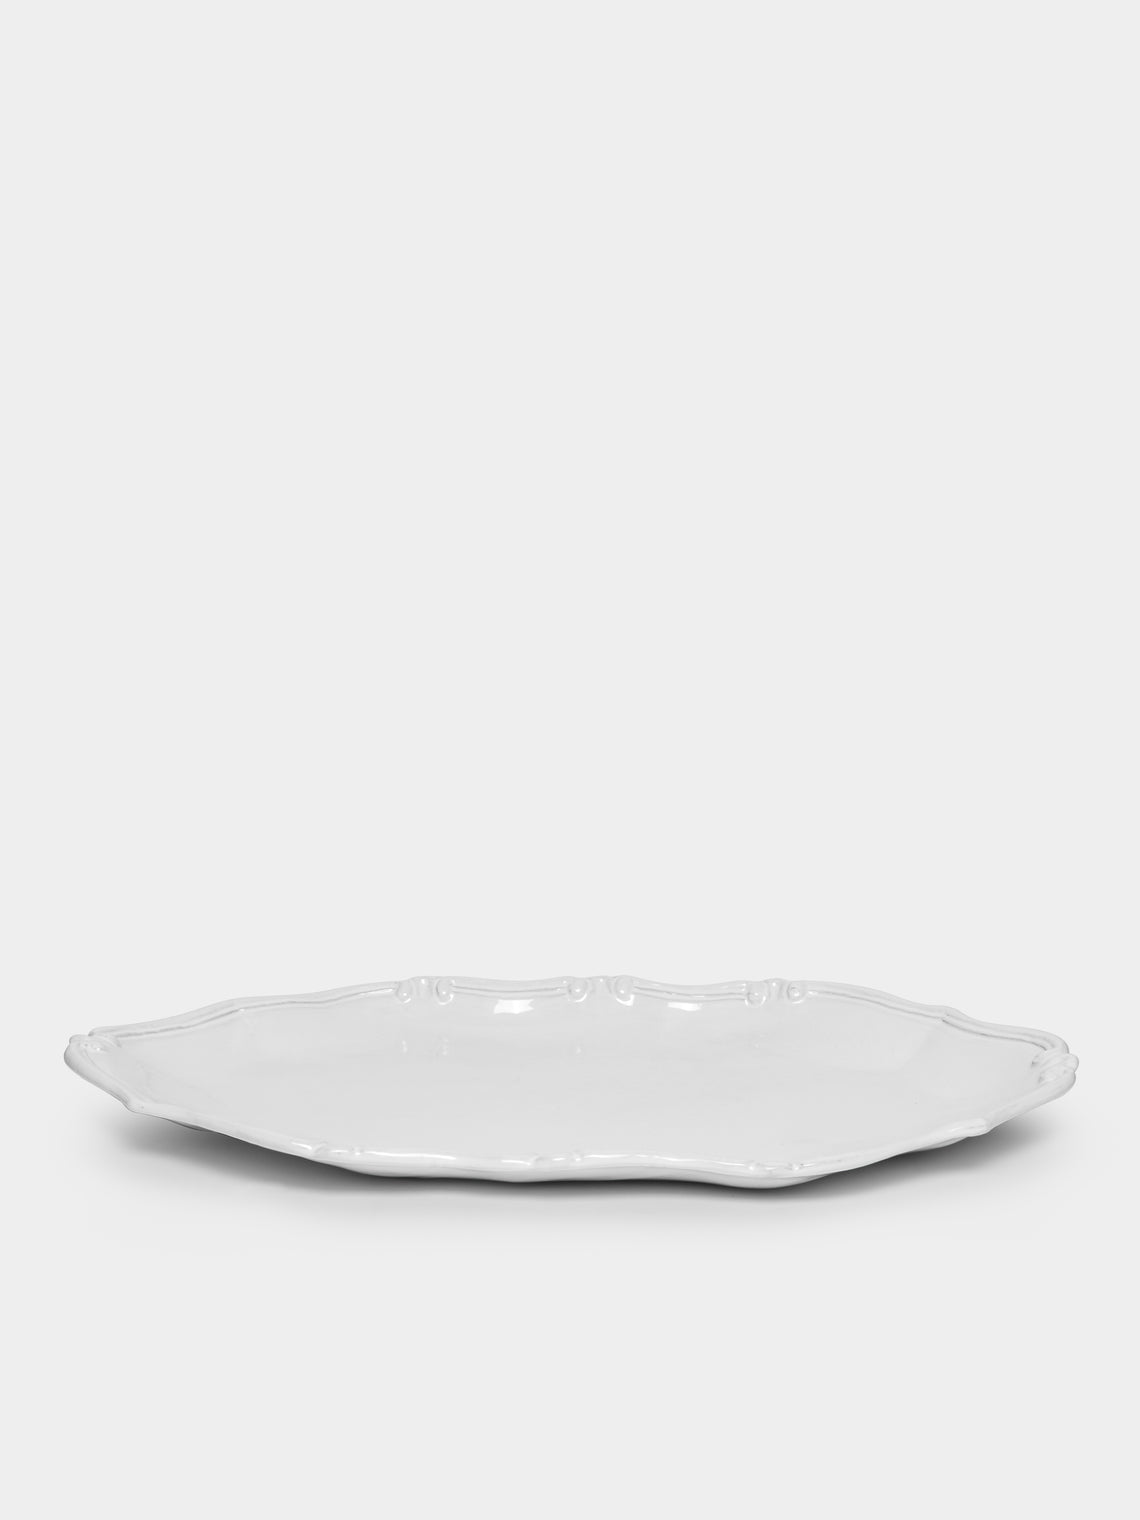 Astier de Villatte - Régence Large Oval Platter -  - ABASK